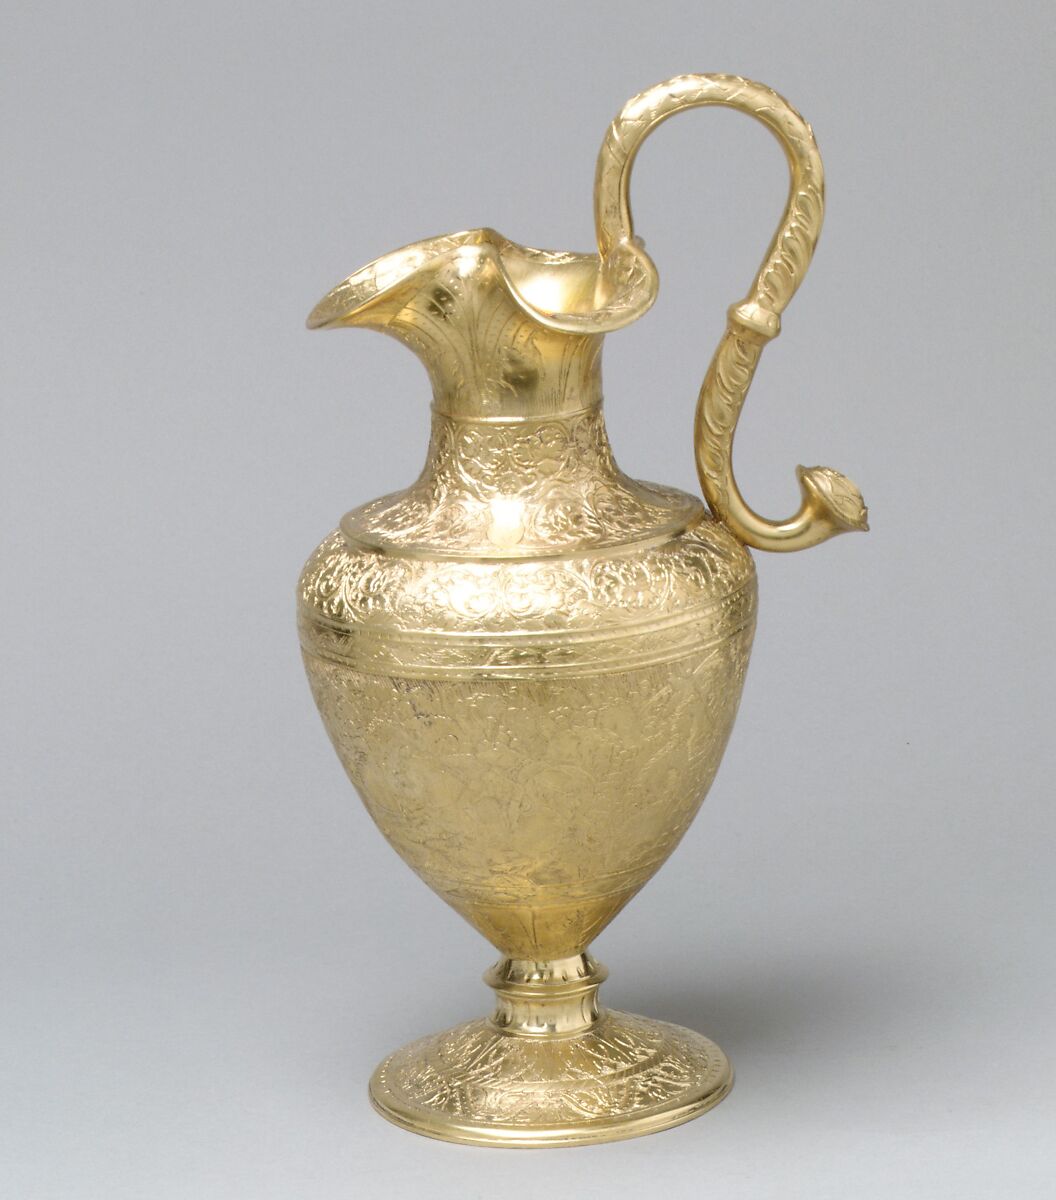 Ewer, Gilt bronze or brass, British, after Italian original 